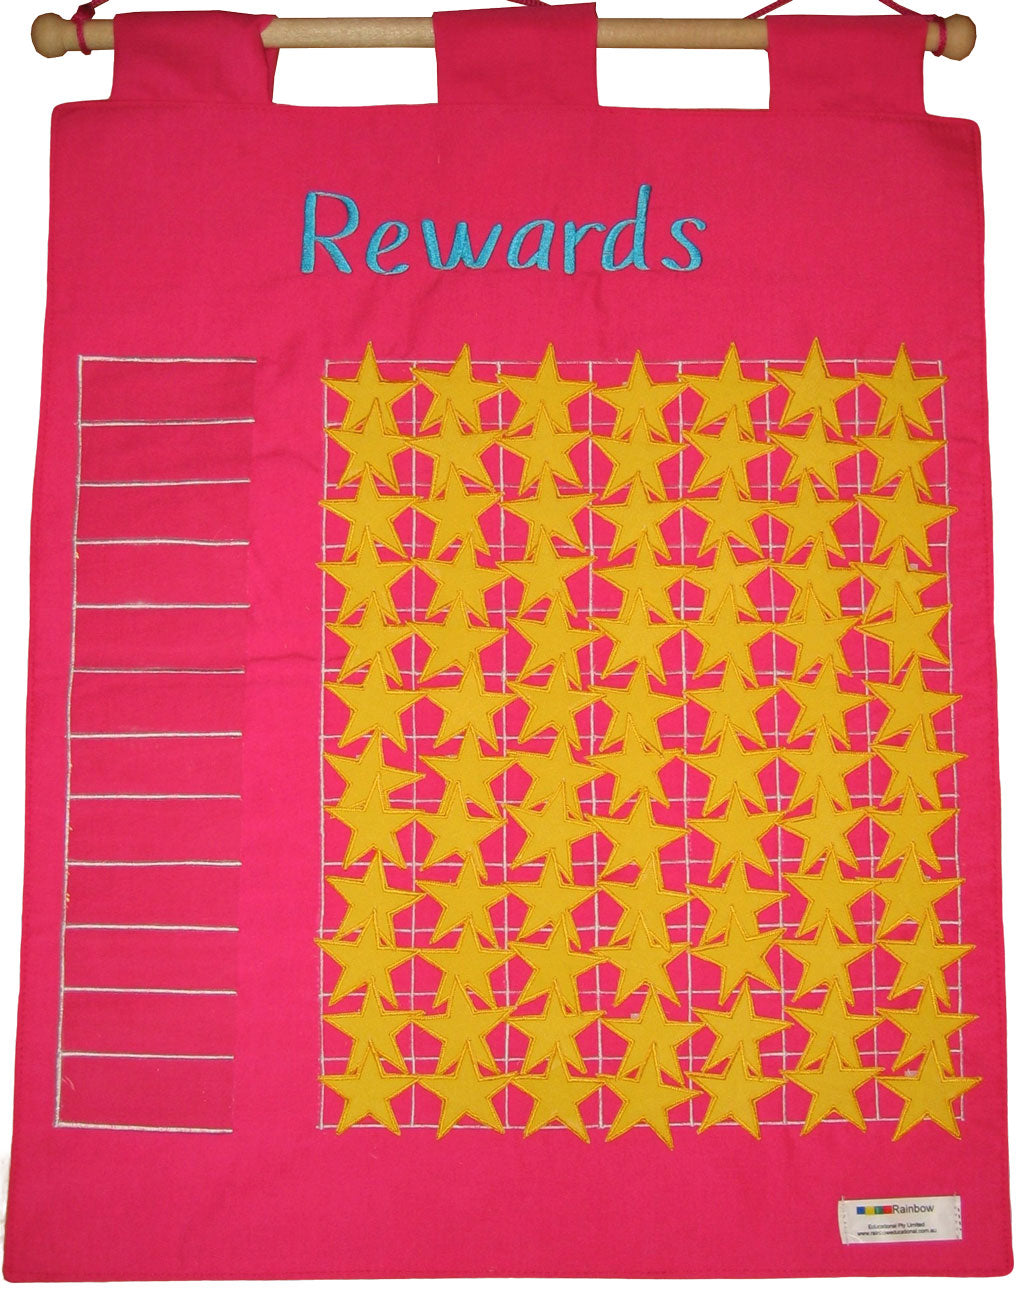 Rewards Chart - Behaviour recognition chart for Children